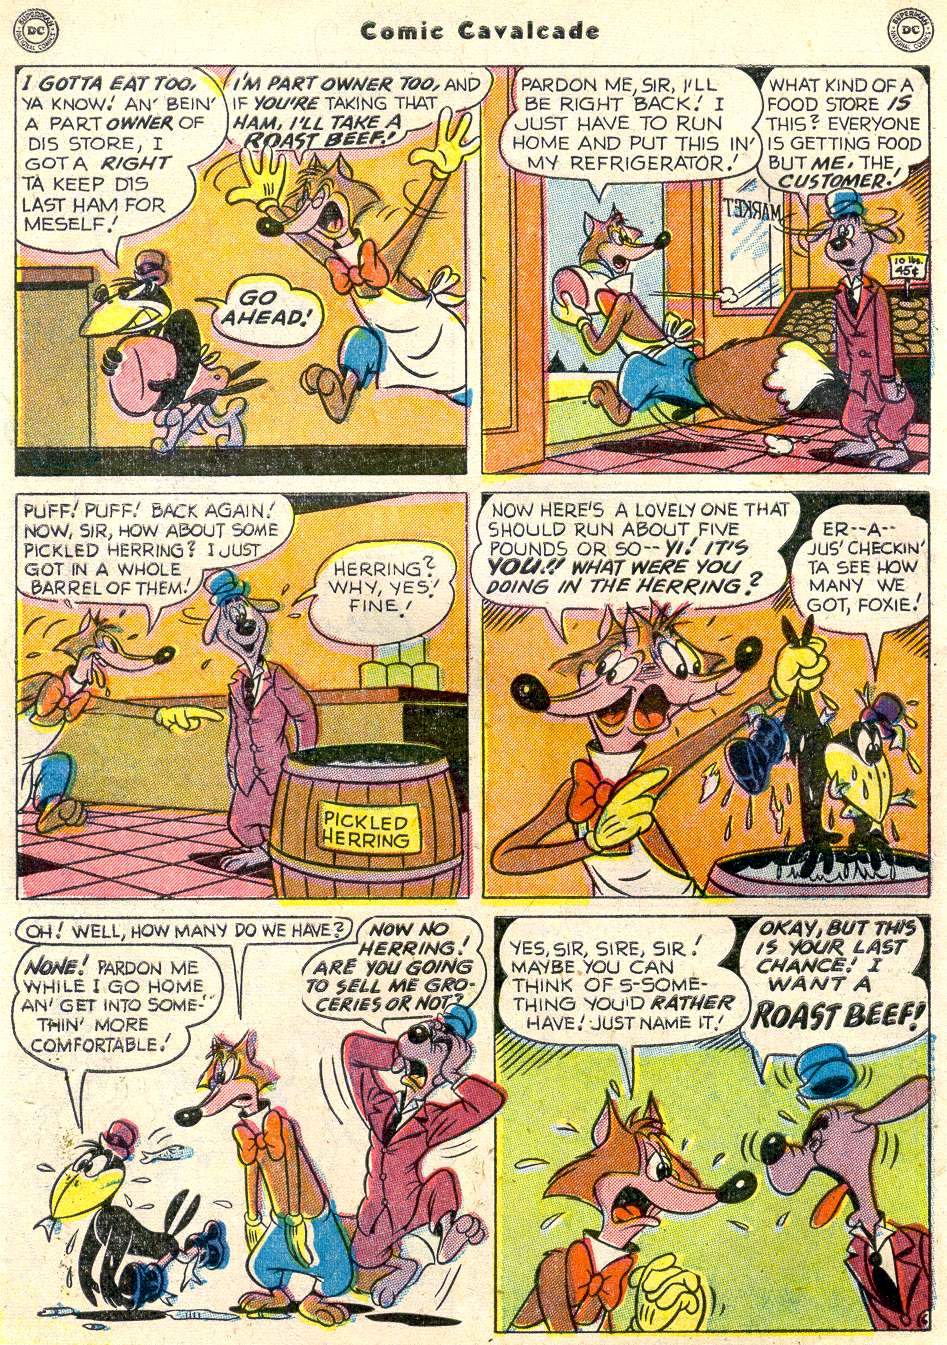 Comic Cavalcade issue 43 - Page 8